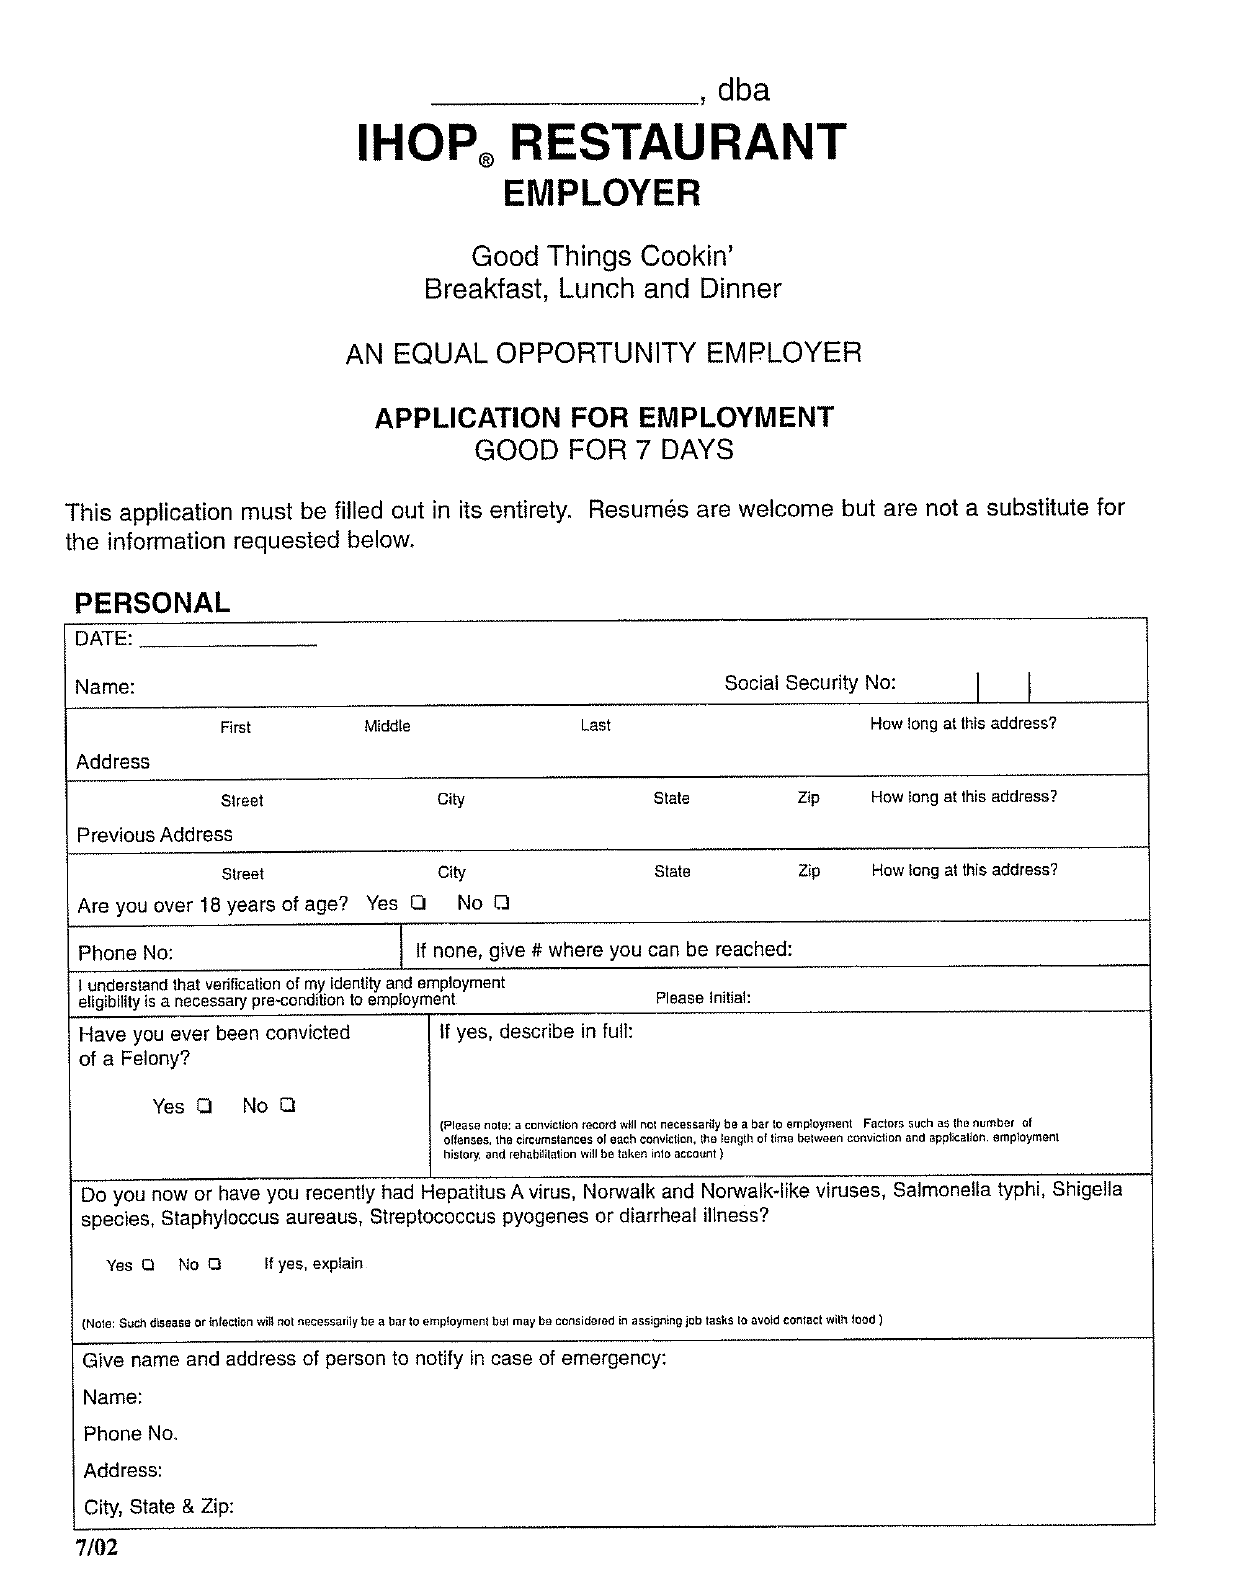 IHOP Restaurant Employer Application for Employment